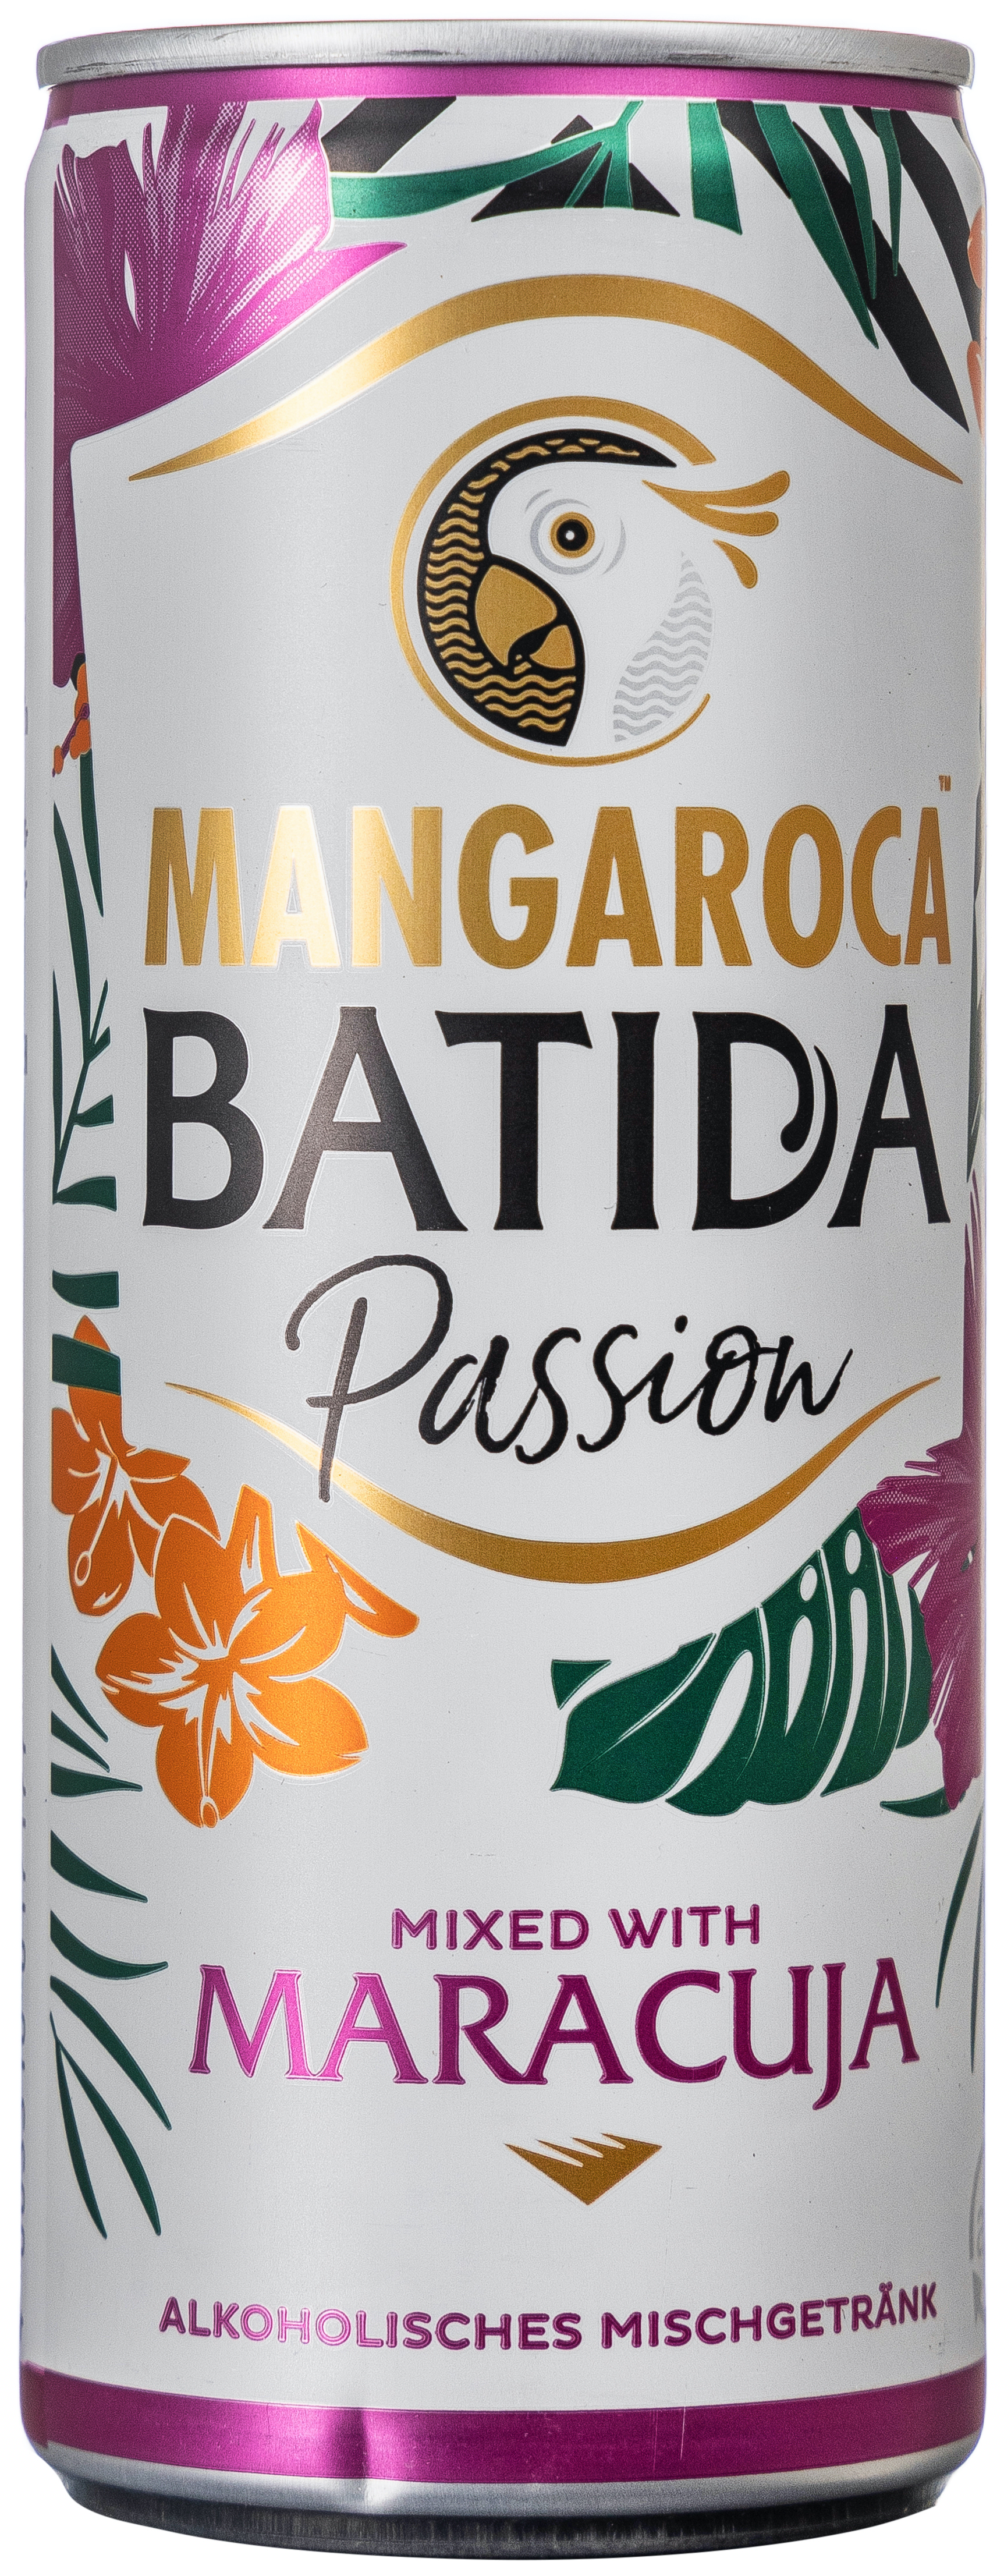 Mangaroca Batida Passion Maracuja 10% vol. 0,33L EINWEG 